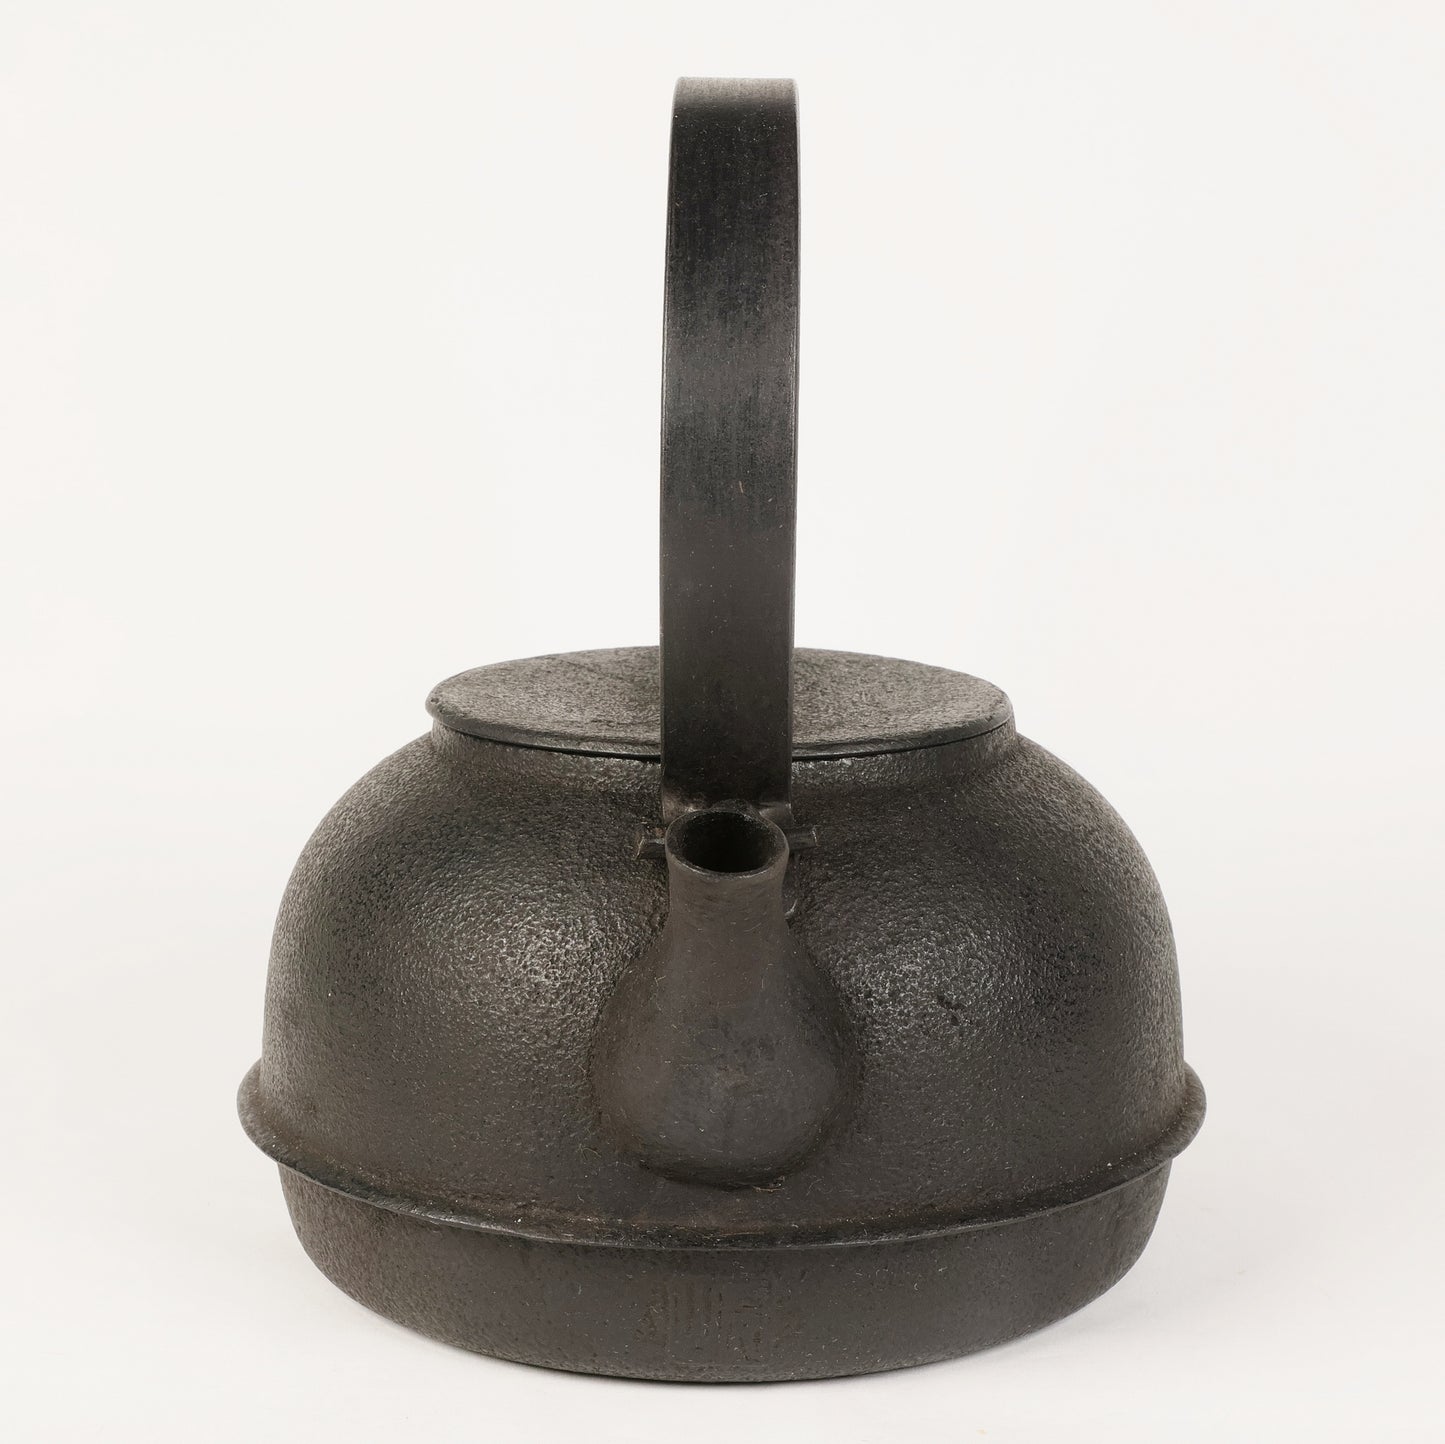 Tetsubin, Tetsubin kettle, Japanese iron kettle, Cast iron kettle, Cast iron tea kettle, Tetsubin iron teapot, Tetsubin iron kettle, Miya, Free Shipping